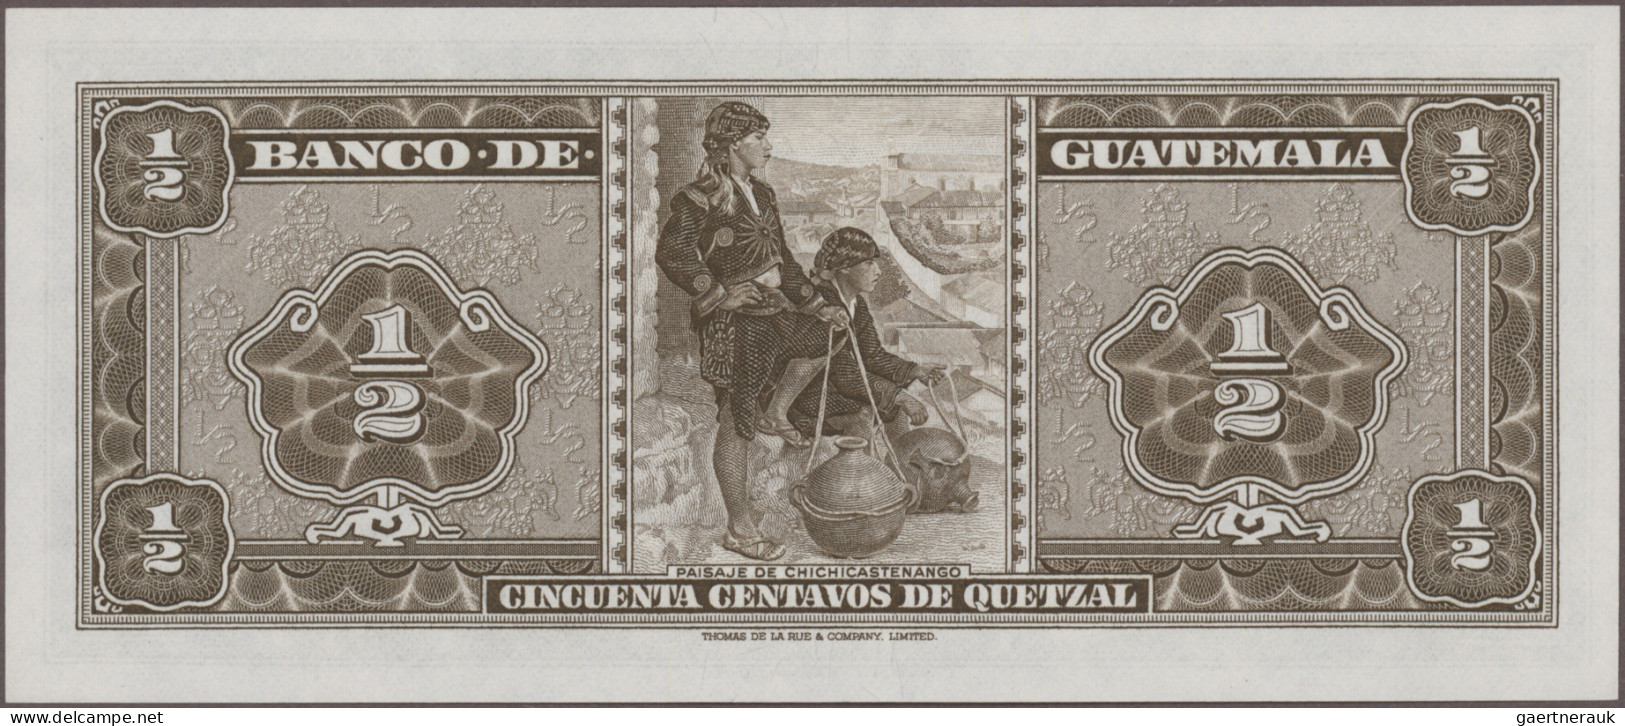 Guatemala: Banco de Guatemala, huge lot with 28 banknotes, series 1942-2012, com